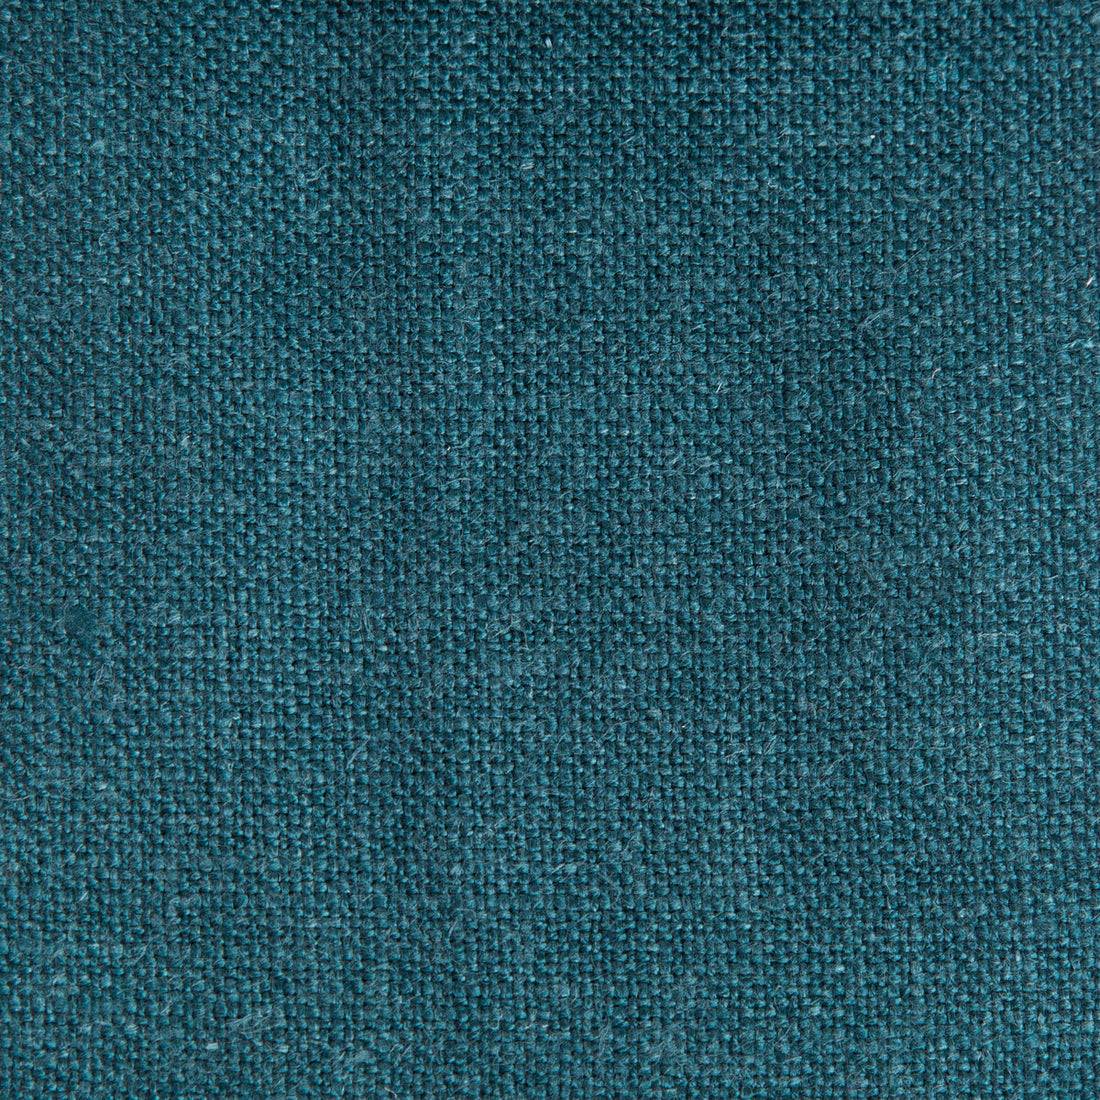 Peru fabric in azul azafata color - pattern GDT5548.014.0 - by Gaston y Daniela in the Gaston Nuevo Mundo collection